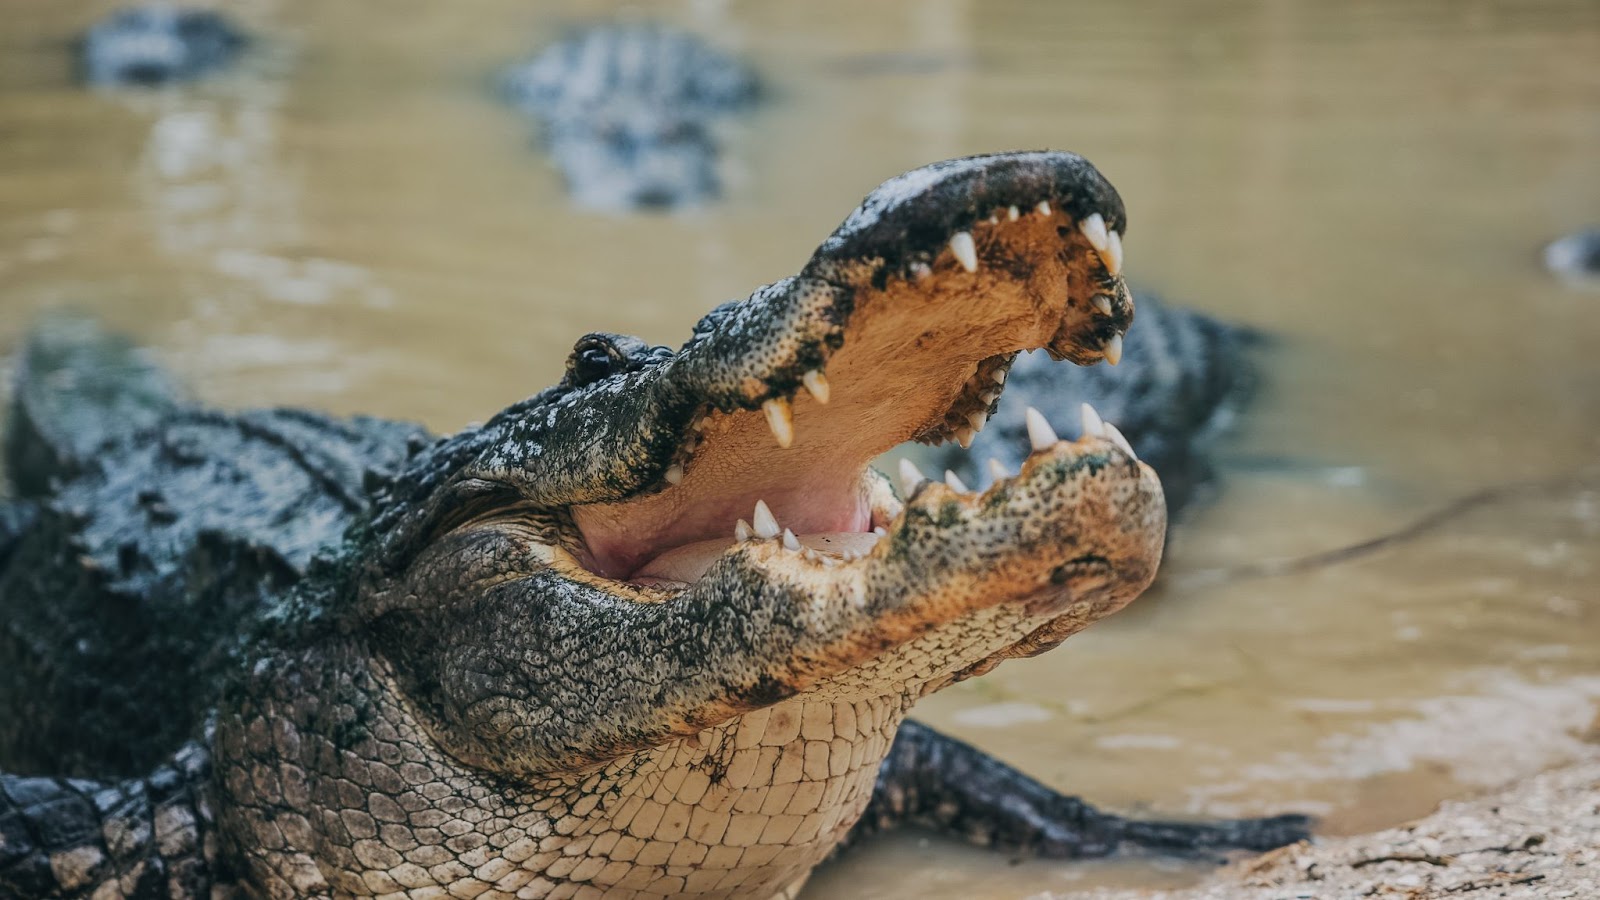 A gator prepares for a feeding at Wild Florida